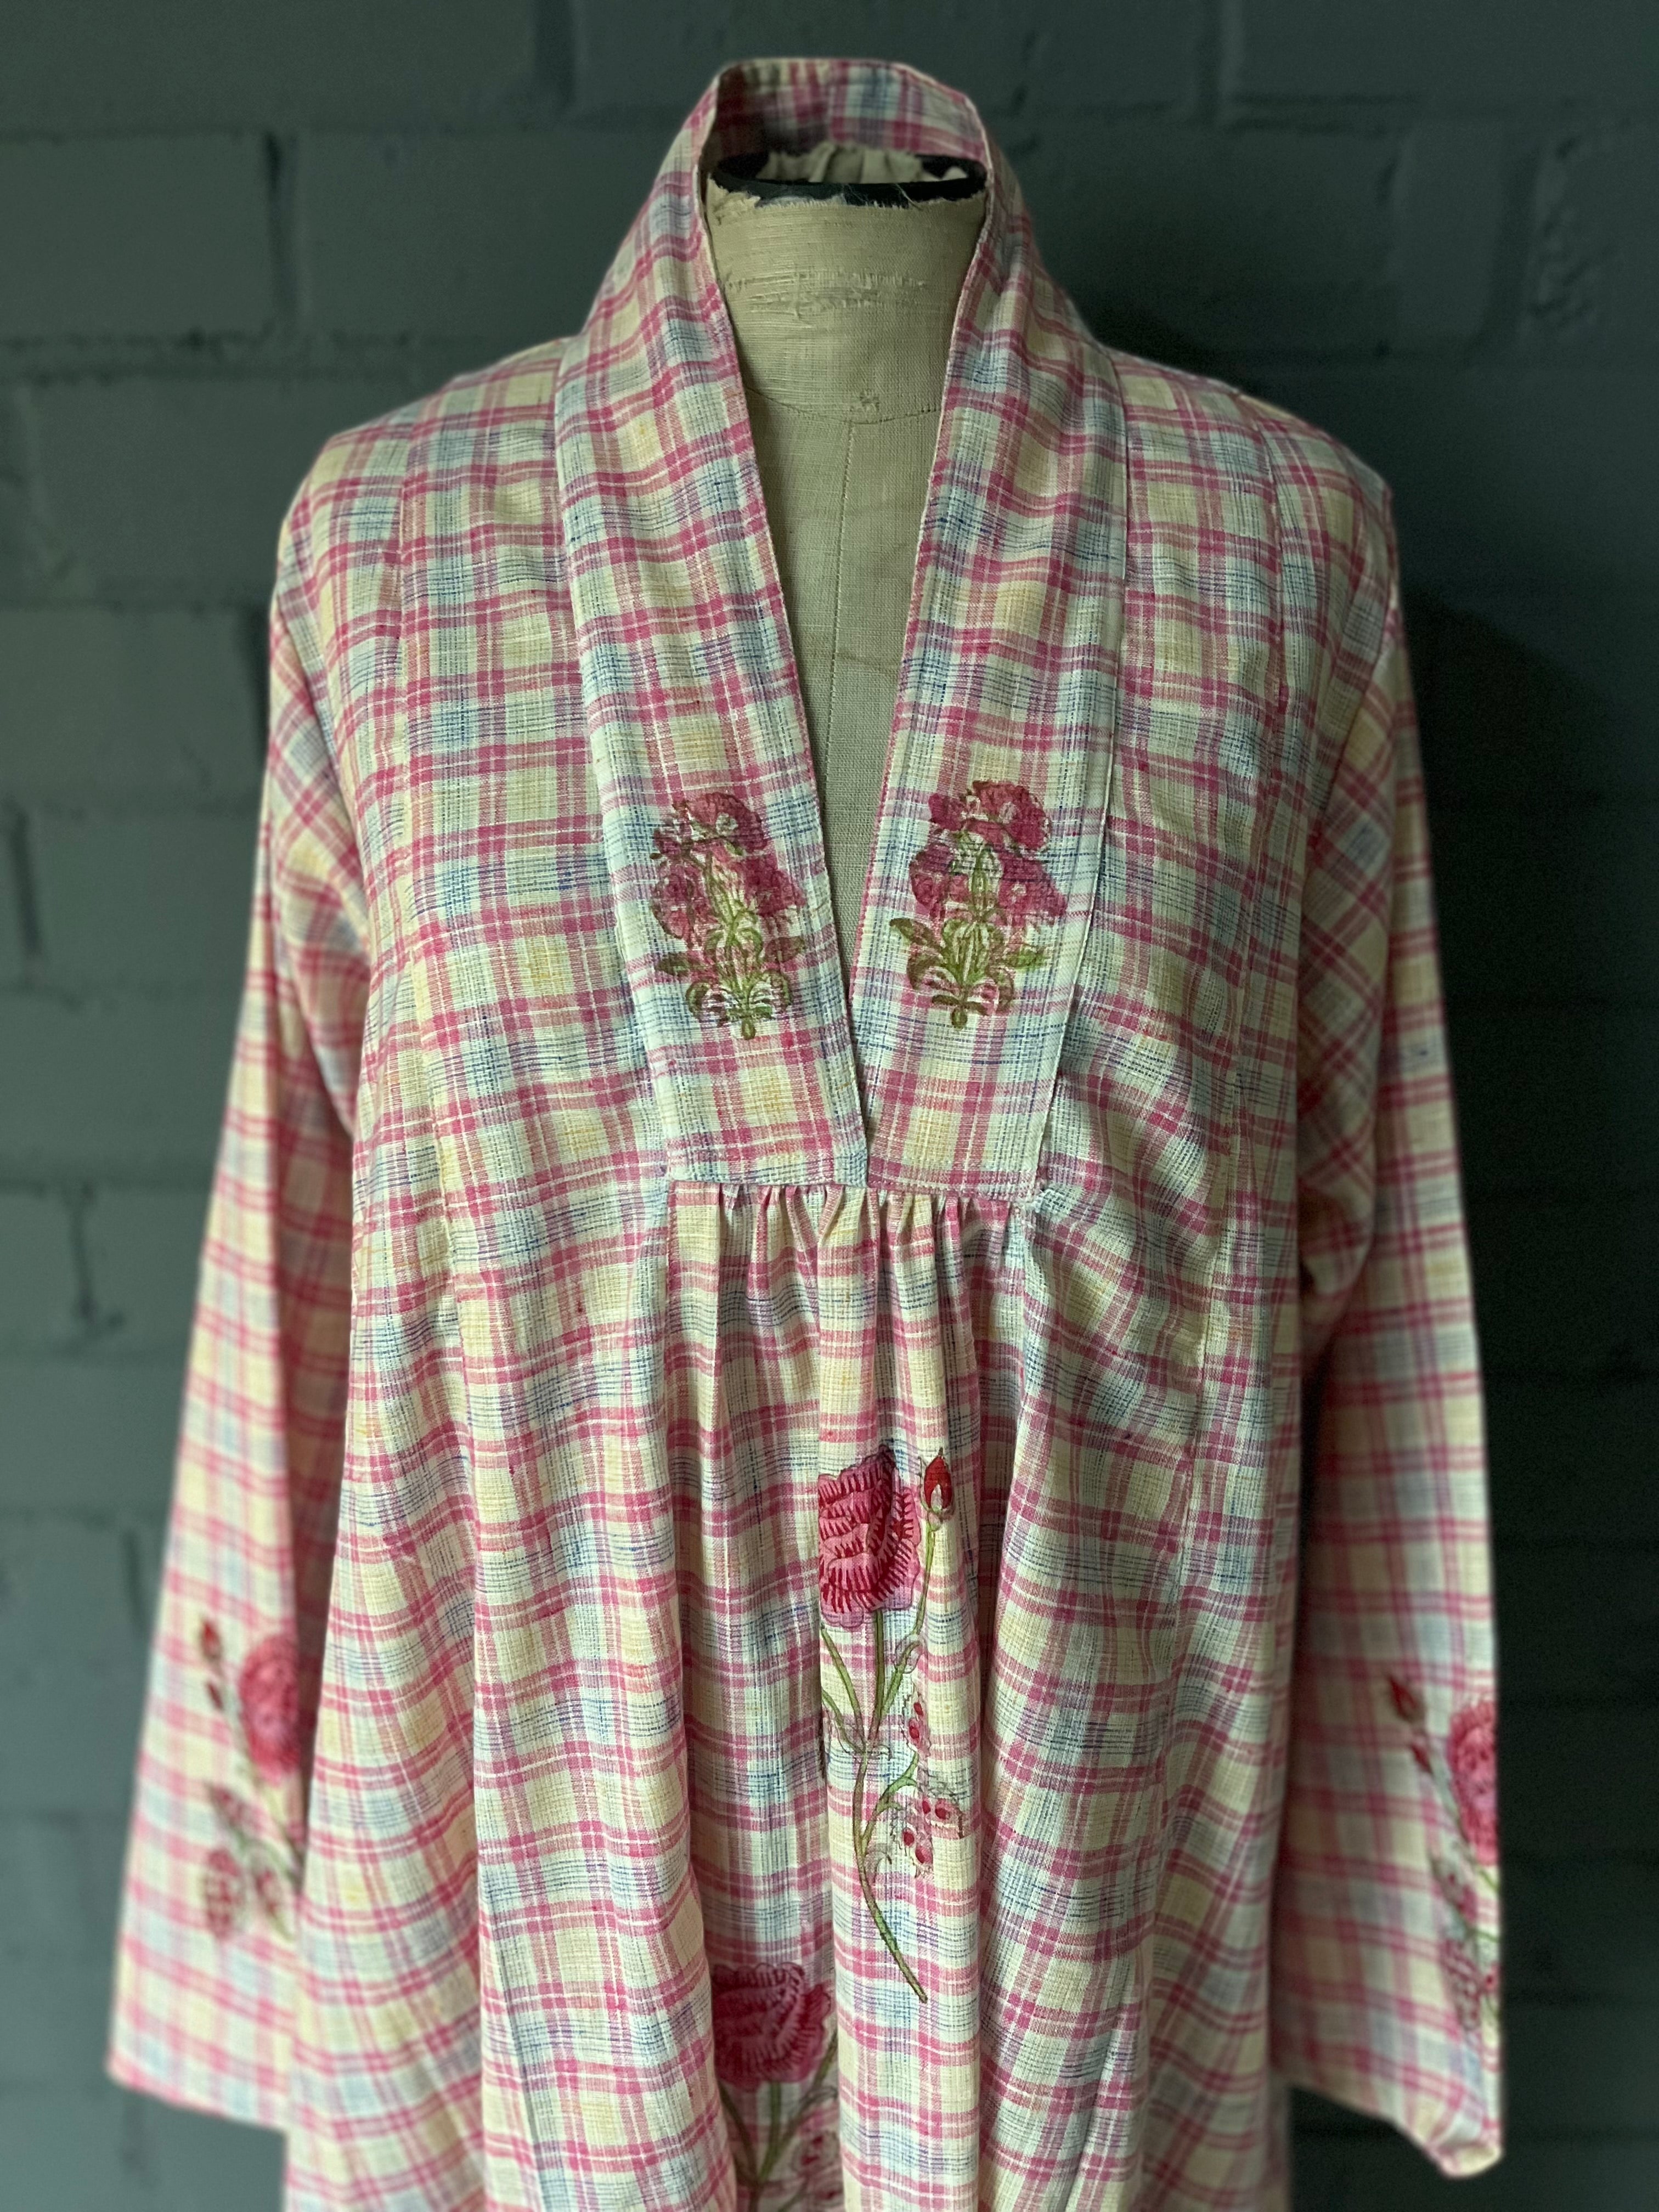 The Grace Dress - Pastel Plaid Cotton with Rose Woodblock Print - L